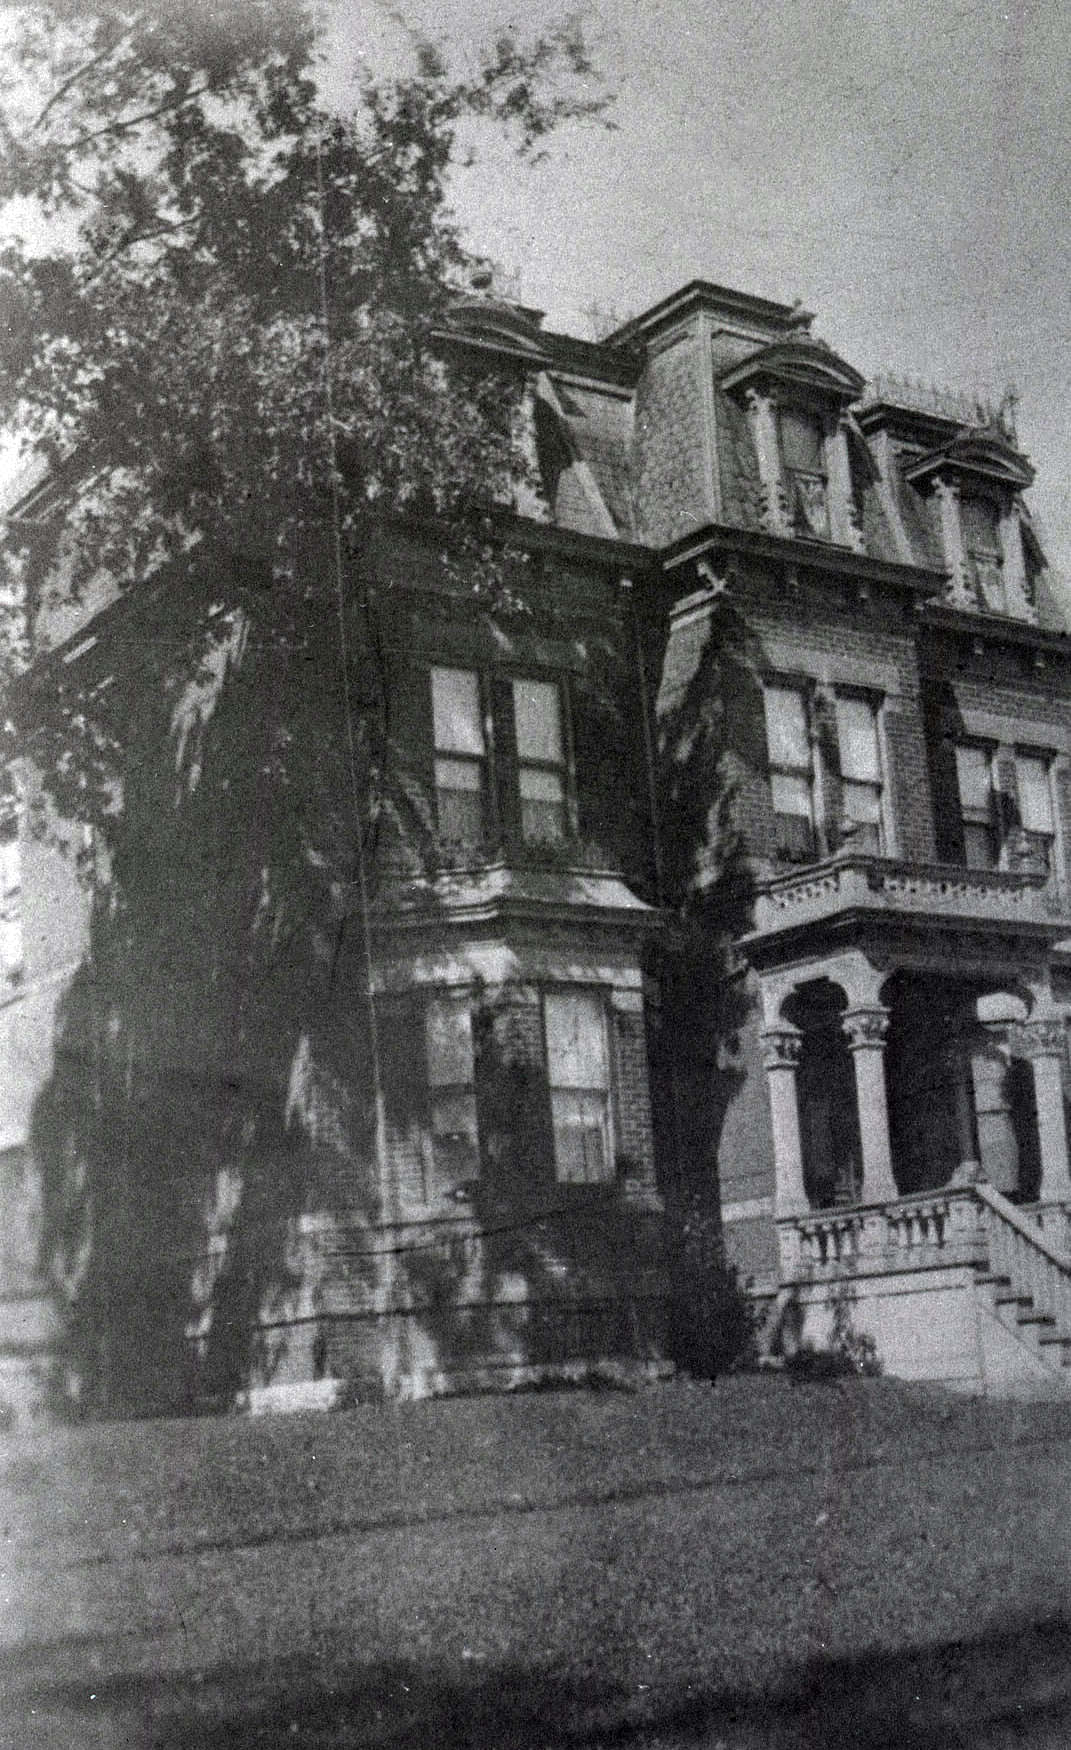 Doherty, Frederick J., 'Abbey Court', in 1928. Yonge St., southwest corner Orchard View Blvd.